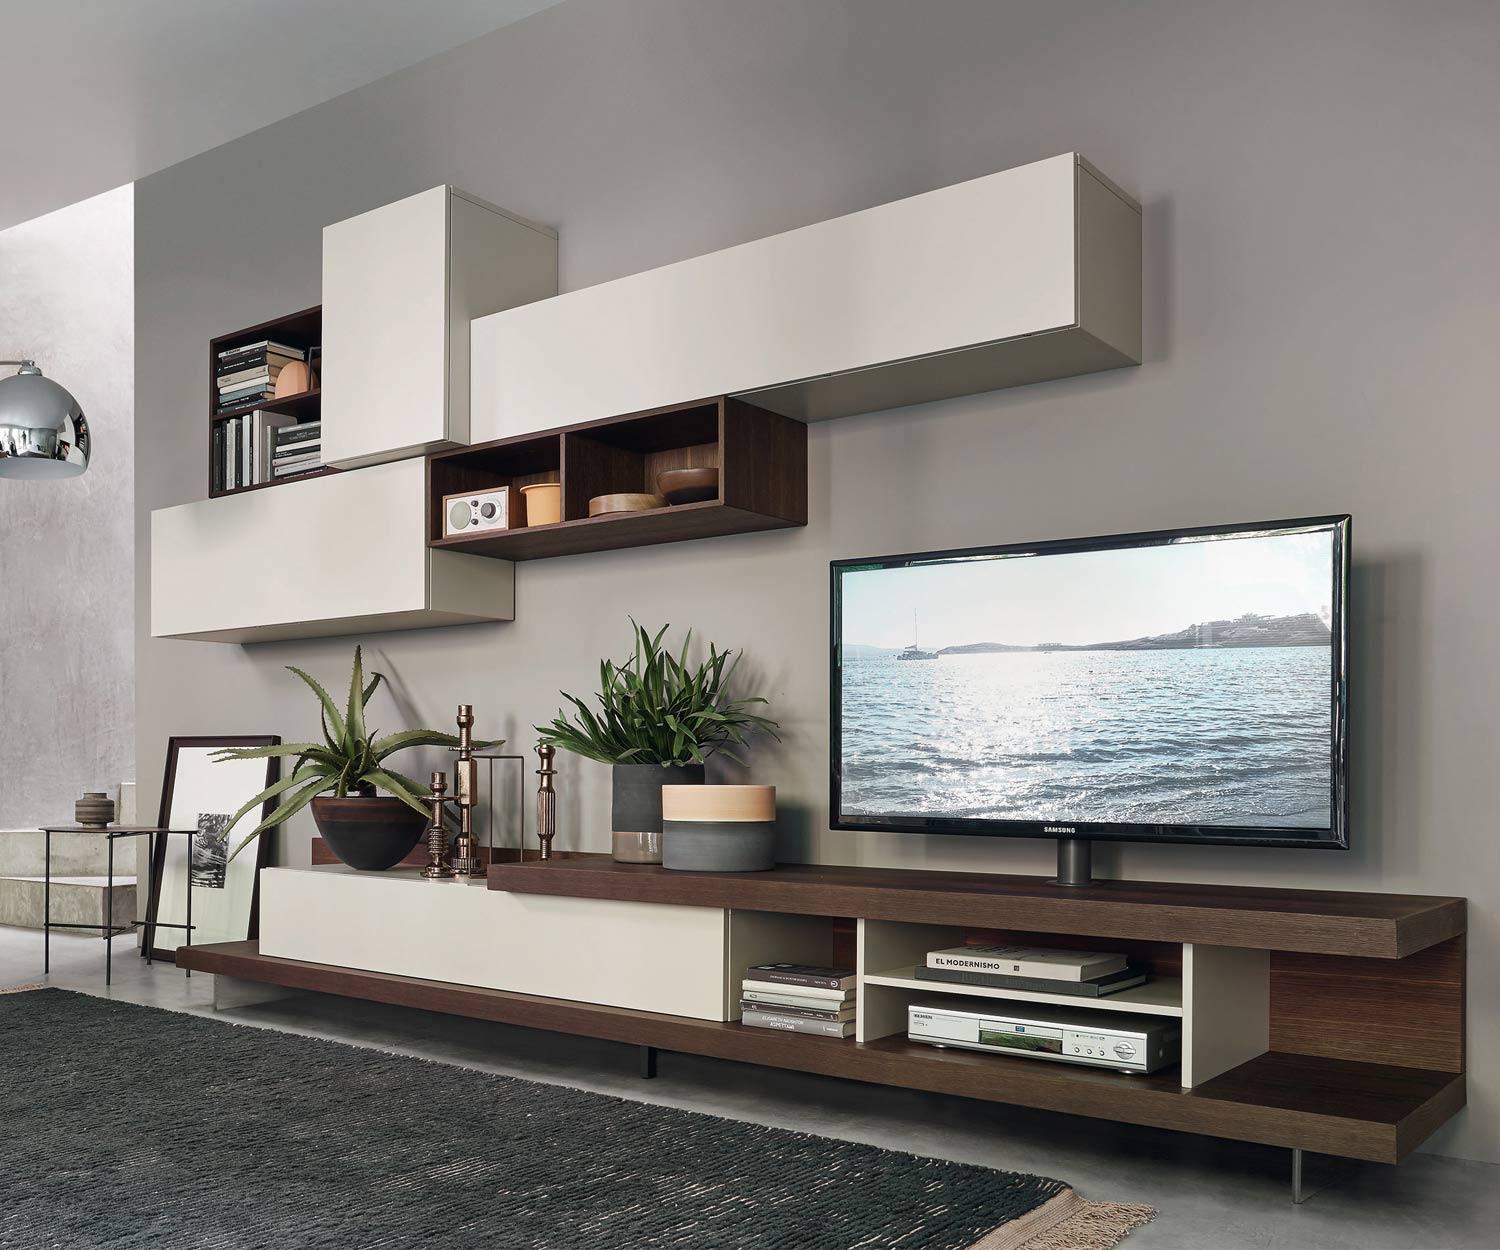 Exclusive open Livitalia Design Design Lowboard Open with TV mount